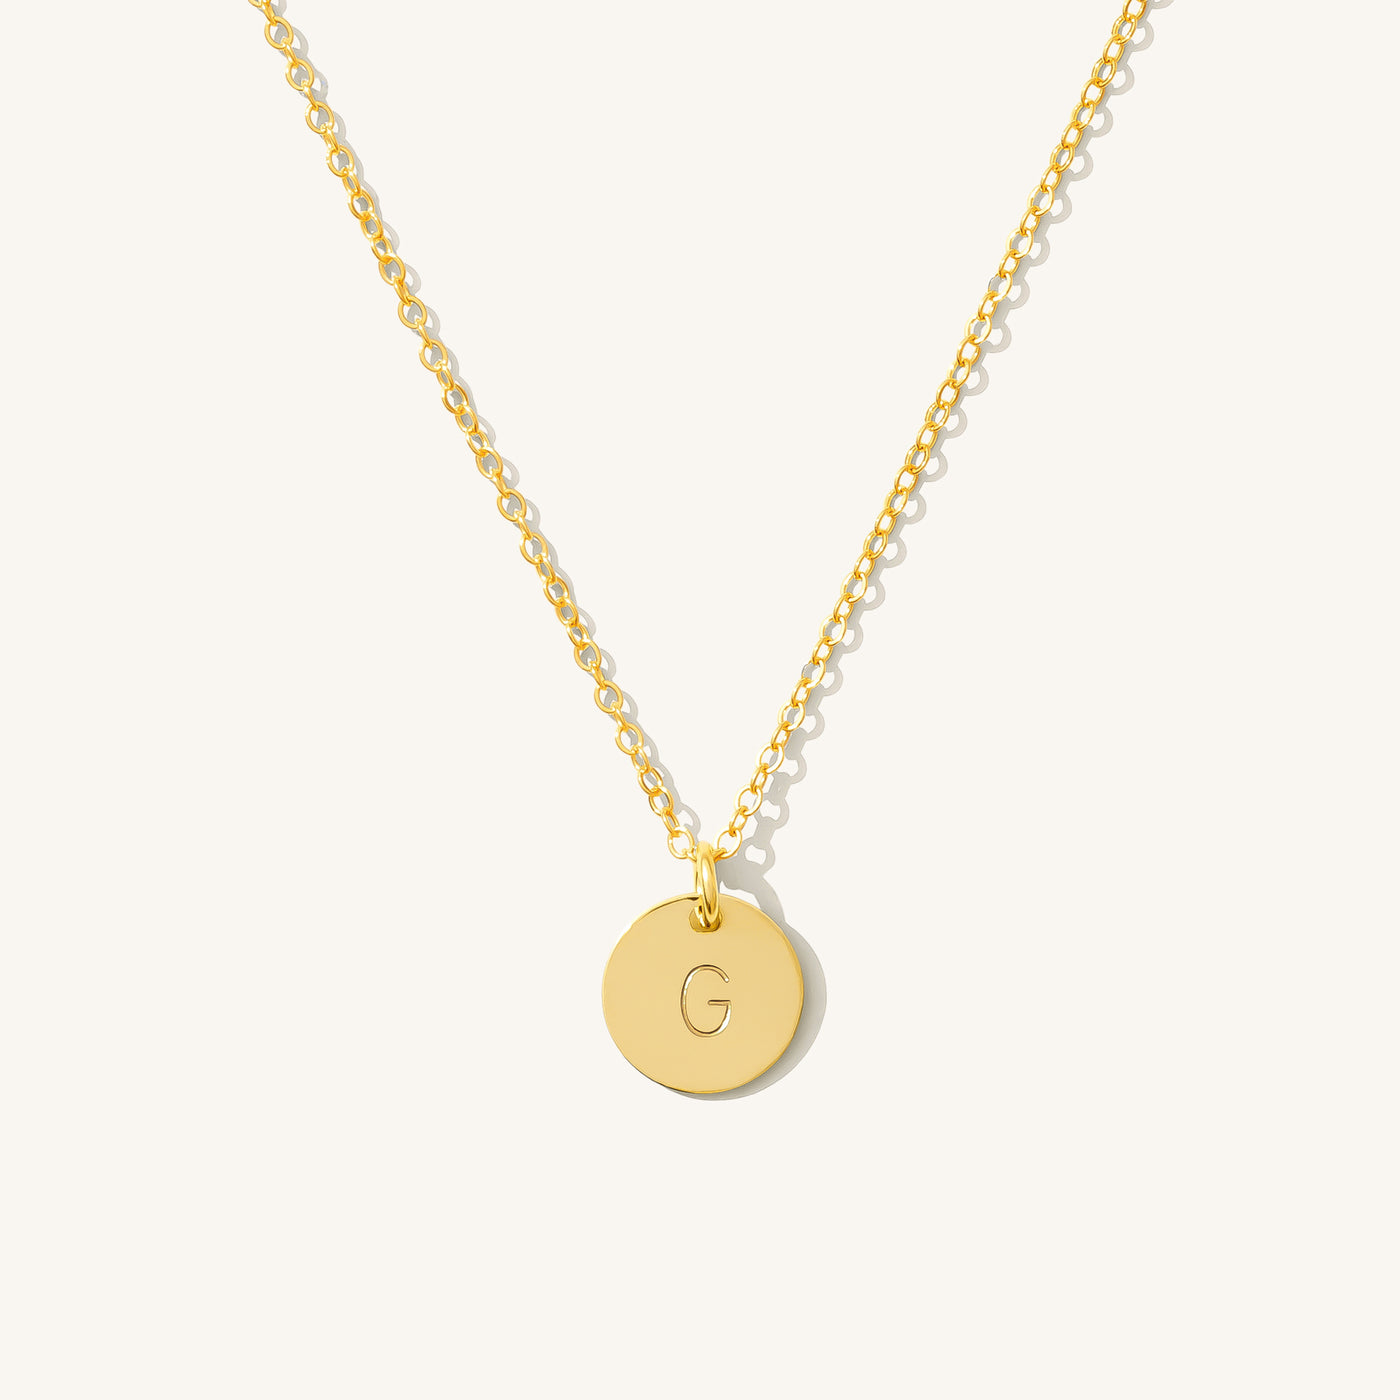 Buy/Send G Initial Pendant Gold Necklace Online- FNP